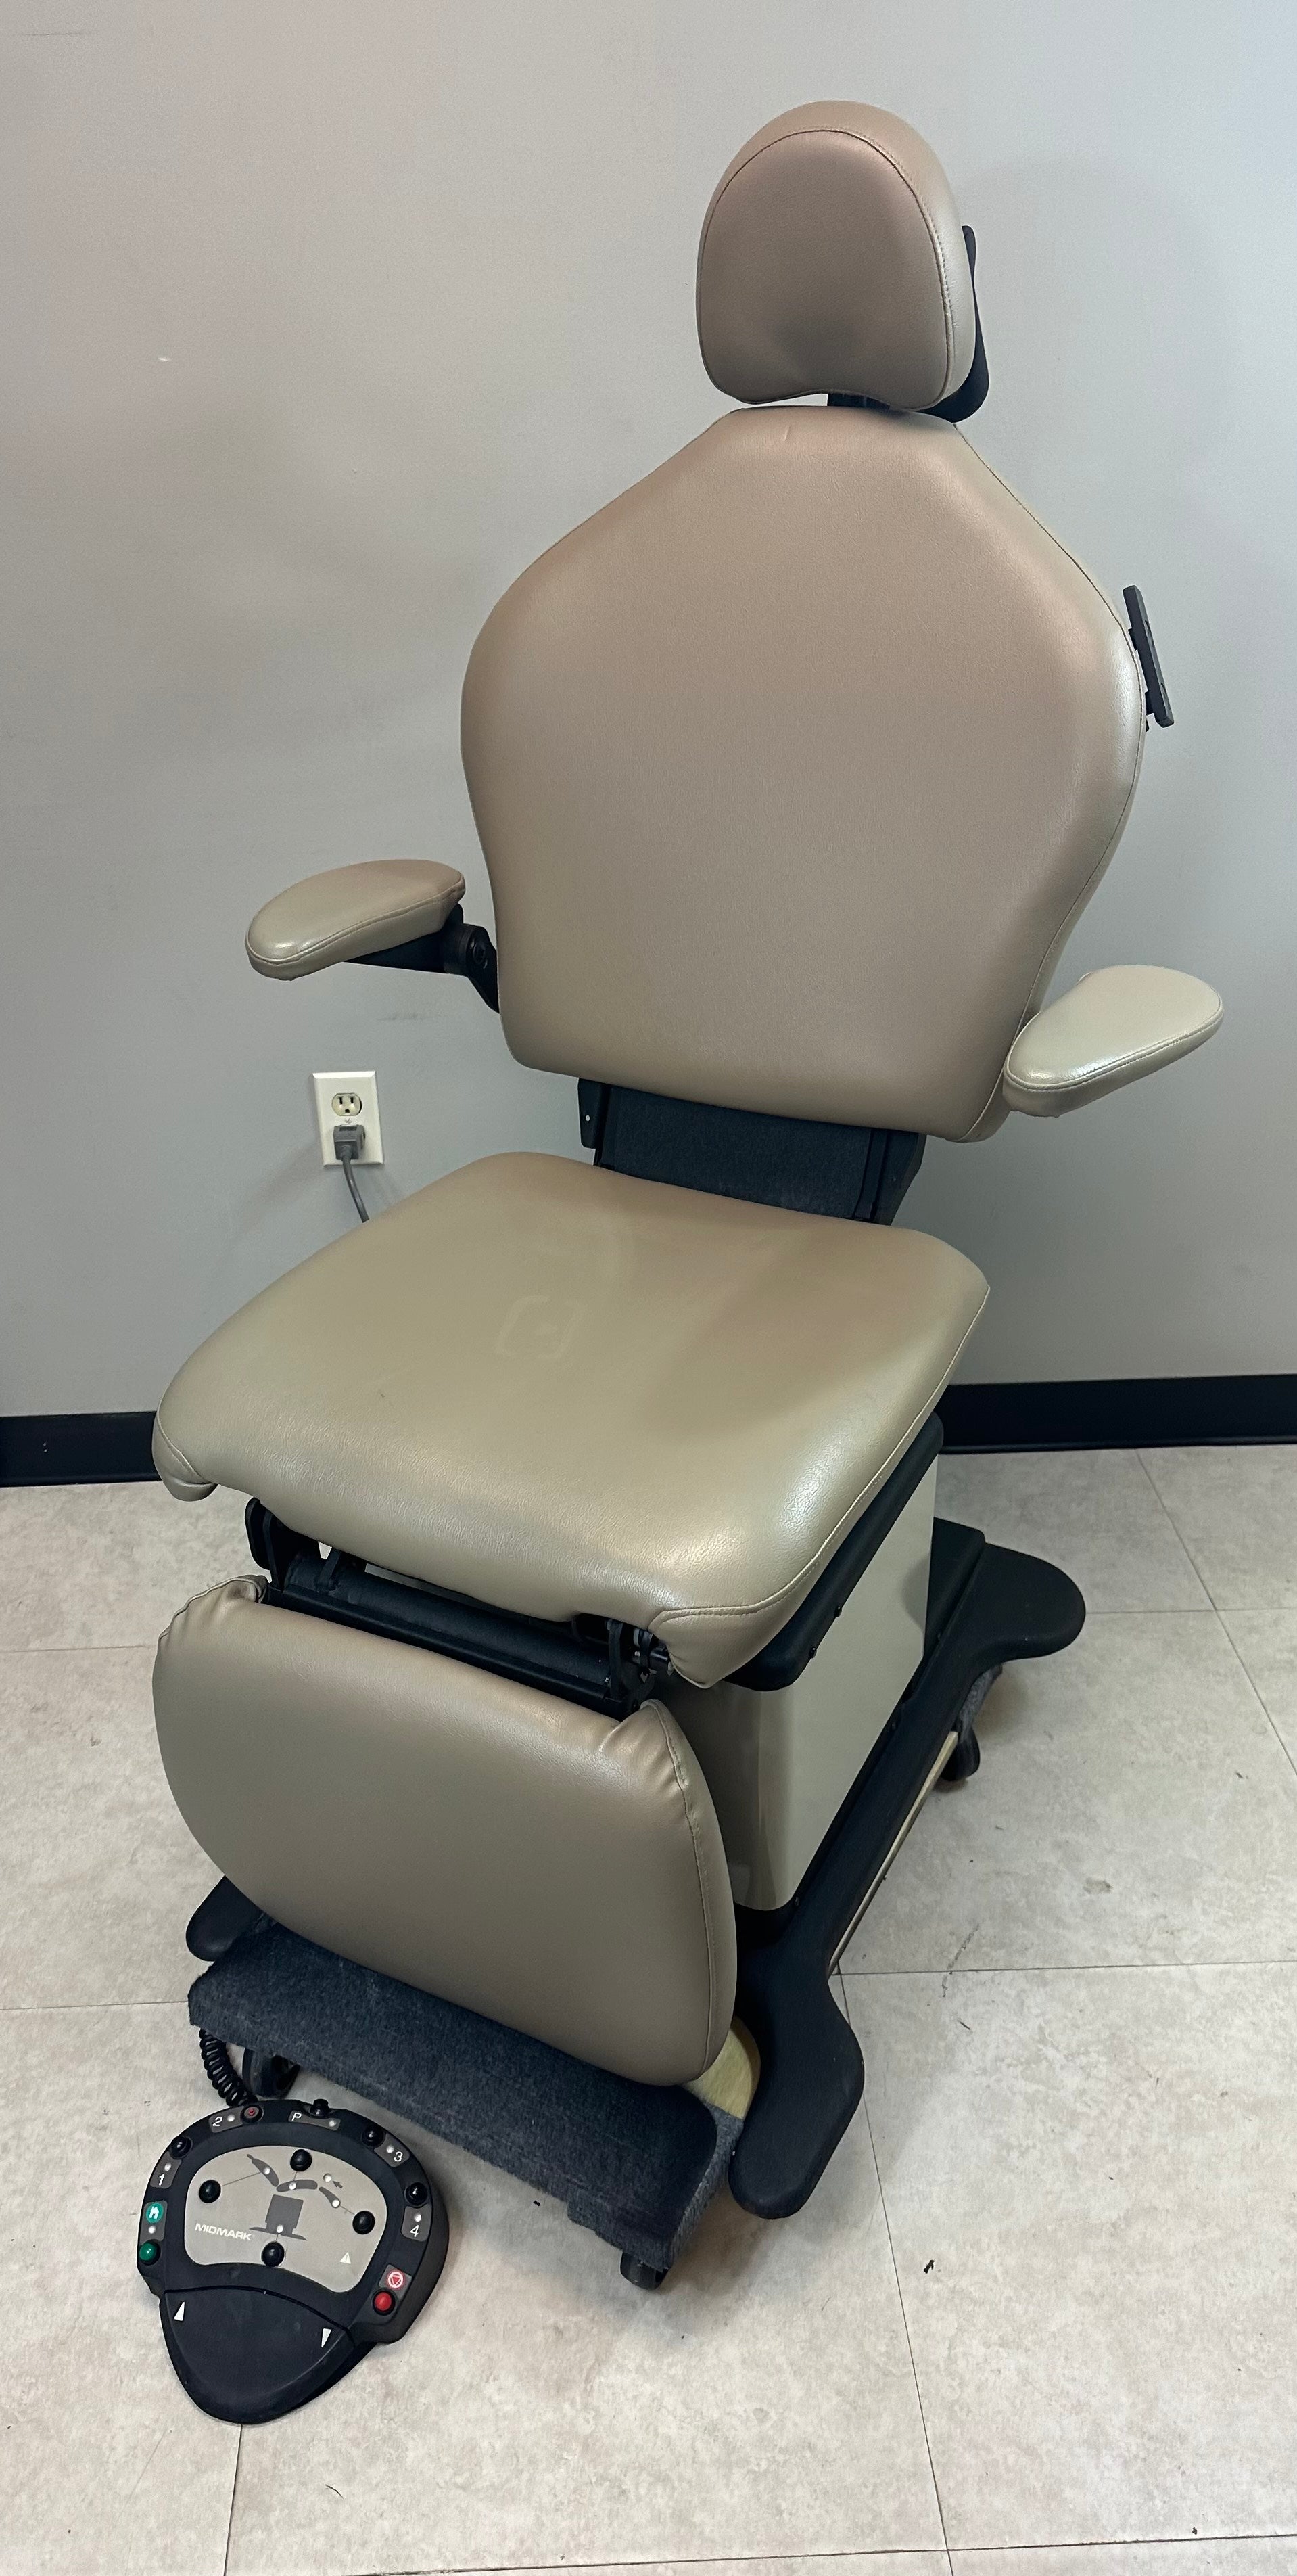 Midmark 419 Procedure Chair (Preowned)